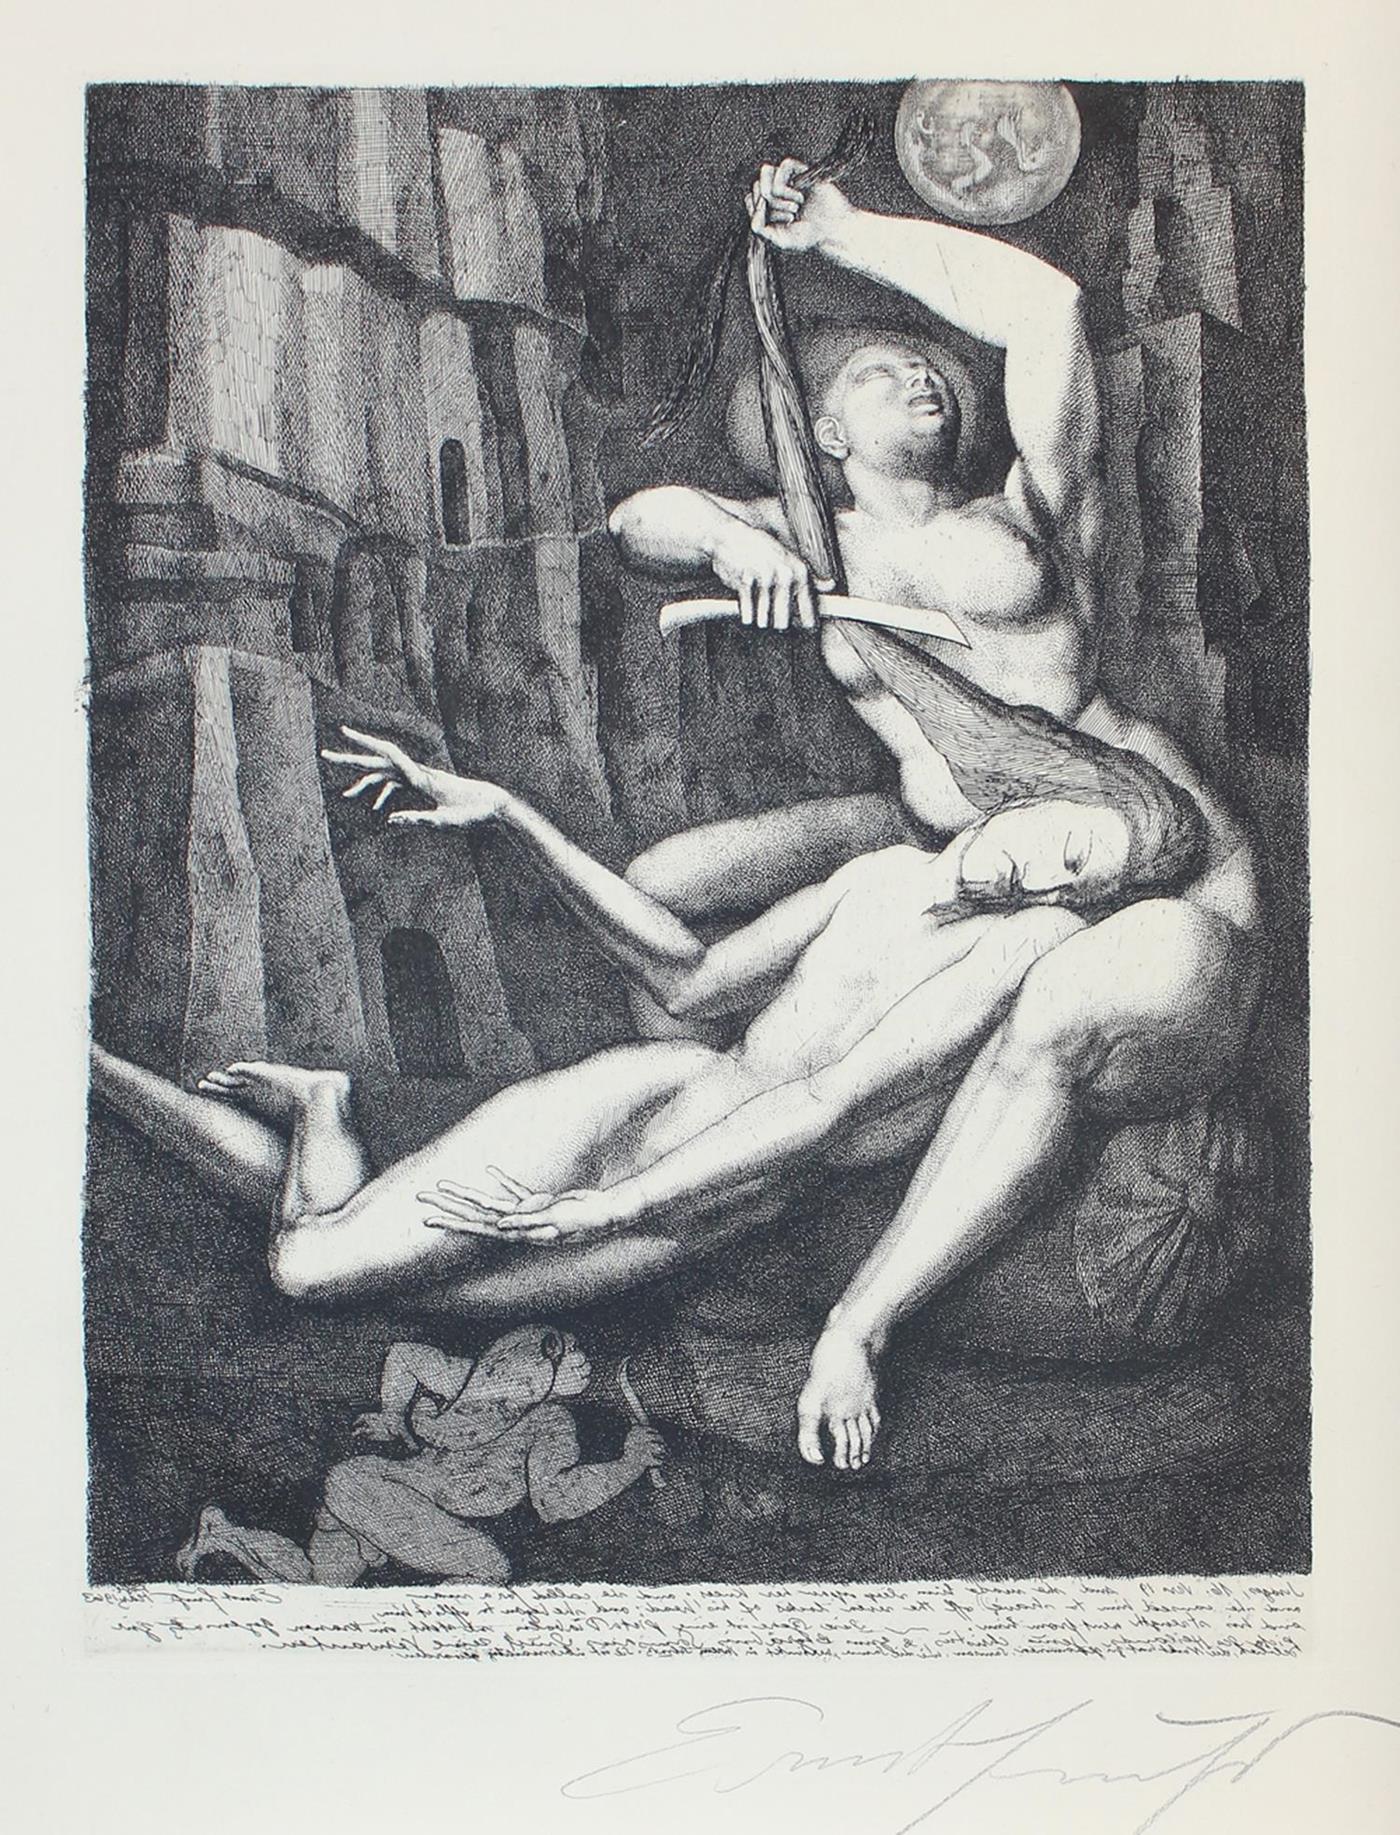 Fuchs,E. - Image 8 of 9